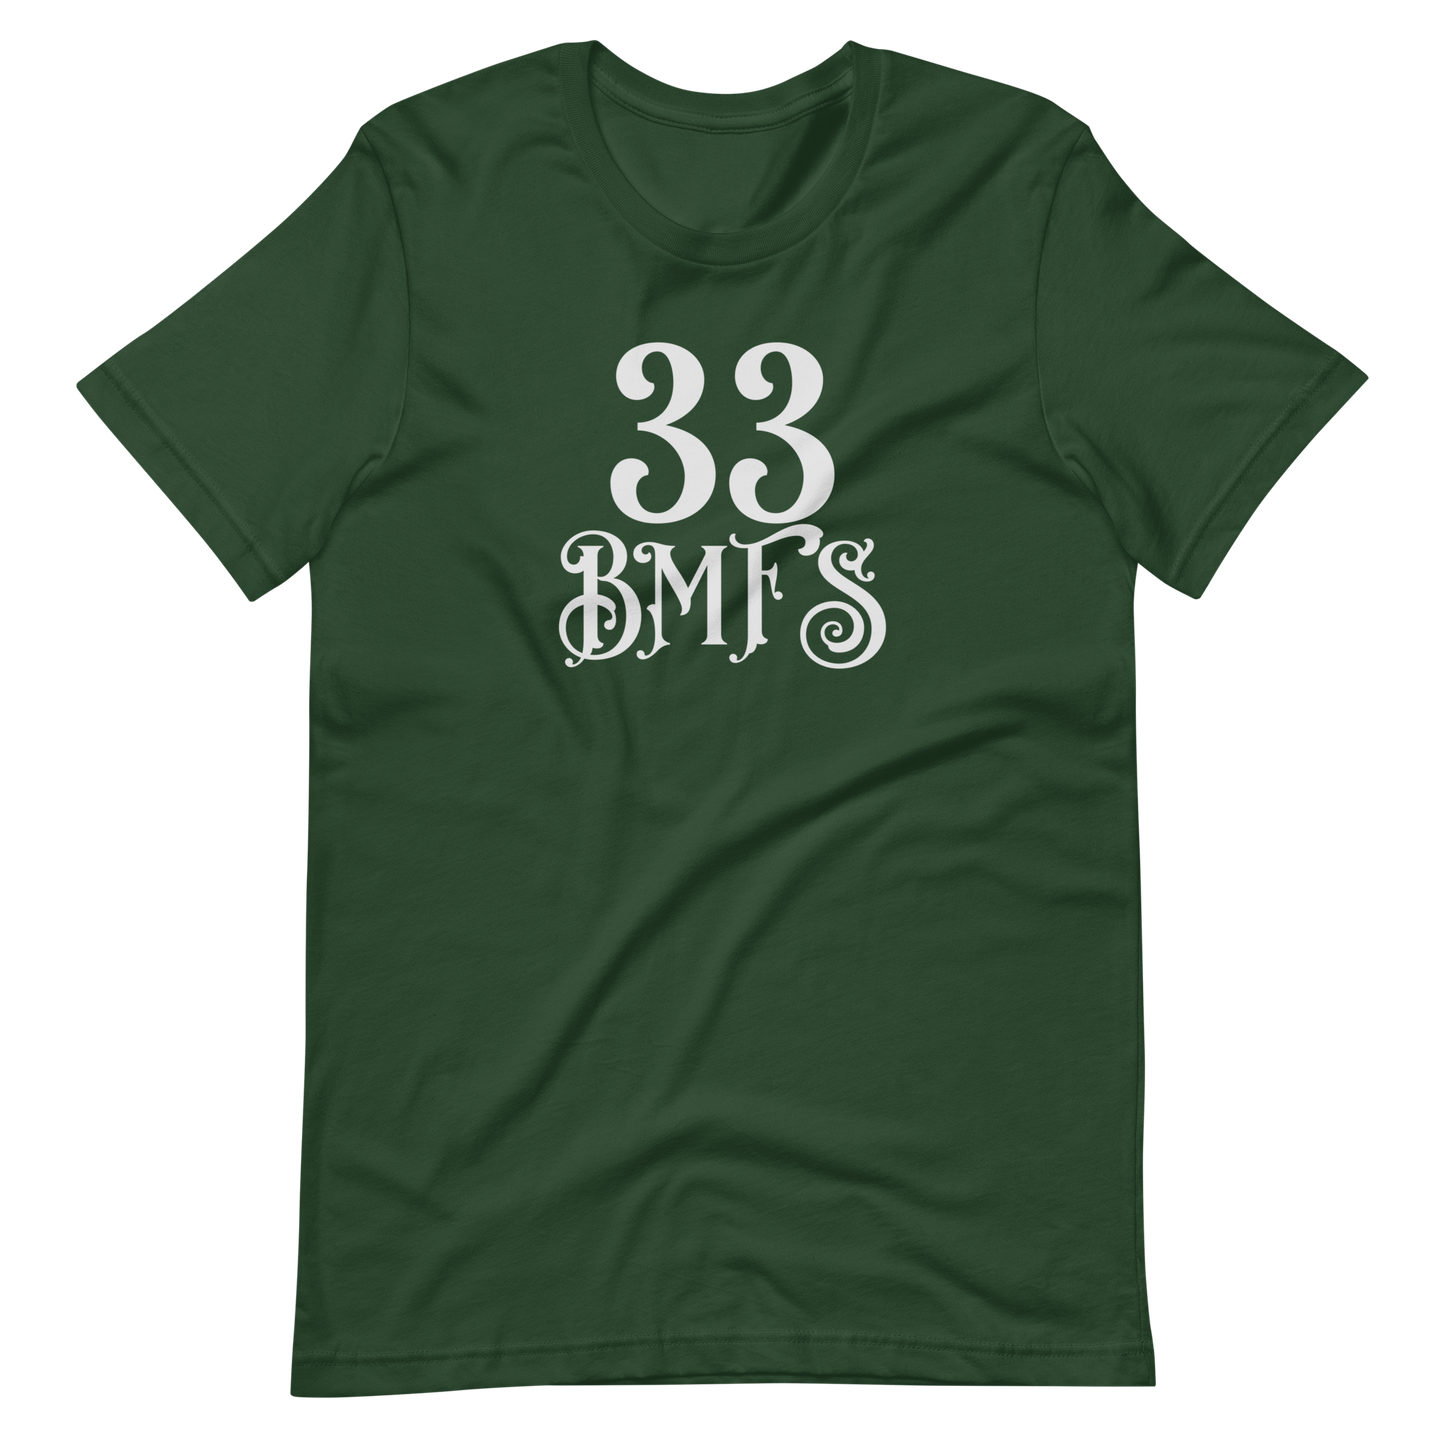 33 BMFS Short-Sleeve Unisex T-Shirt